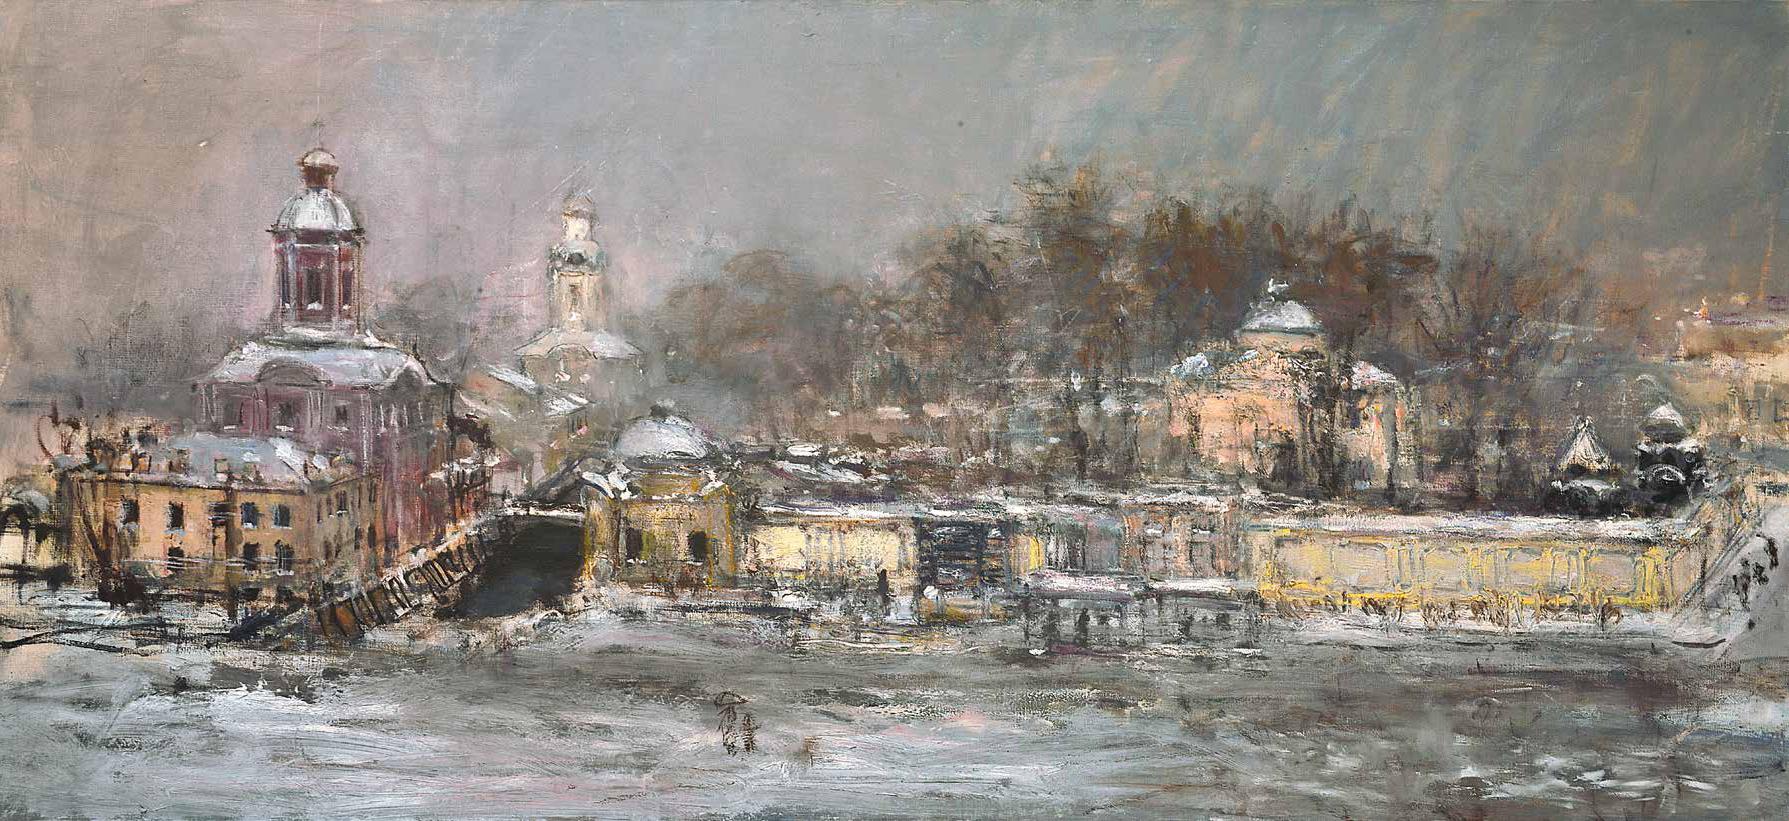 alexander nevsky Lavra. Slush, 2013. Original modern art painting